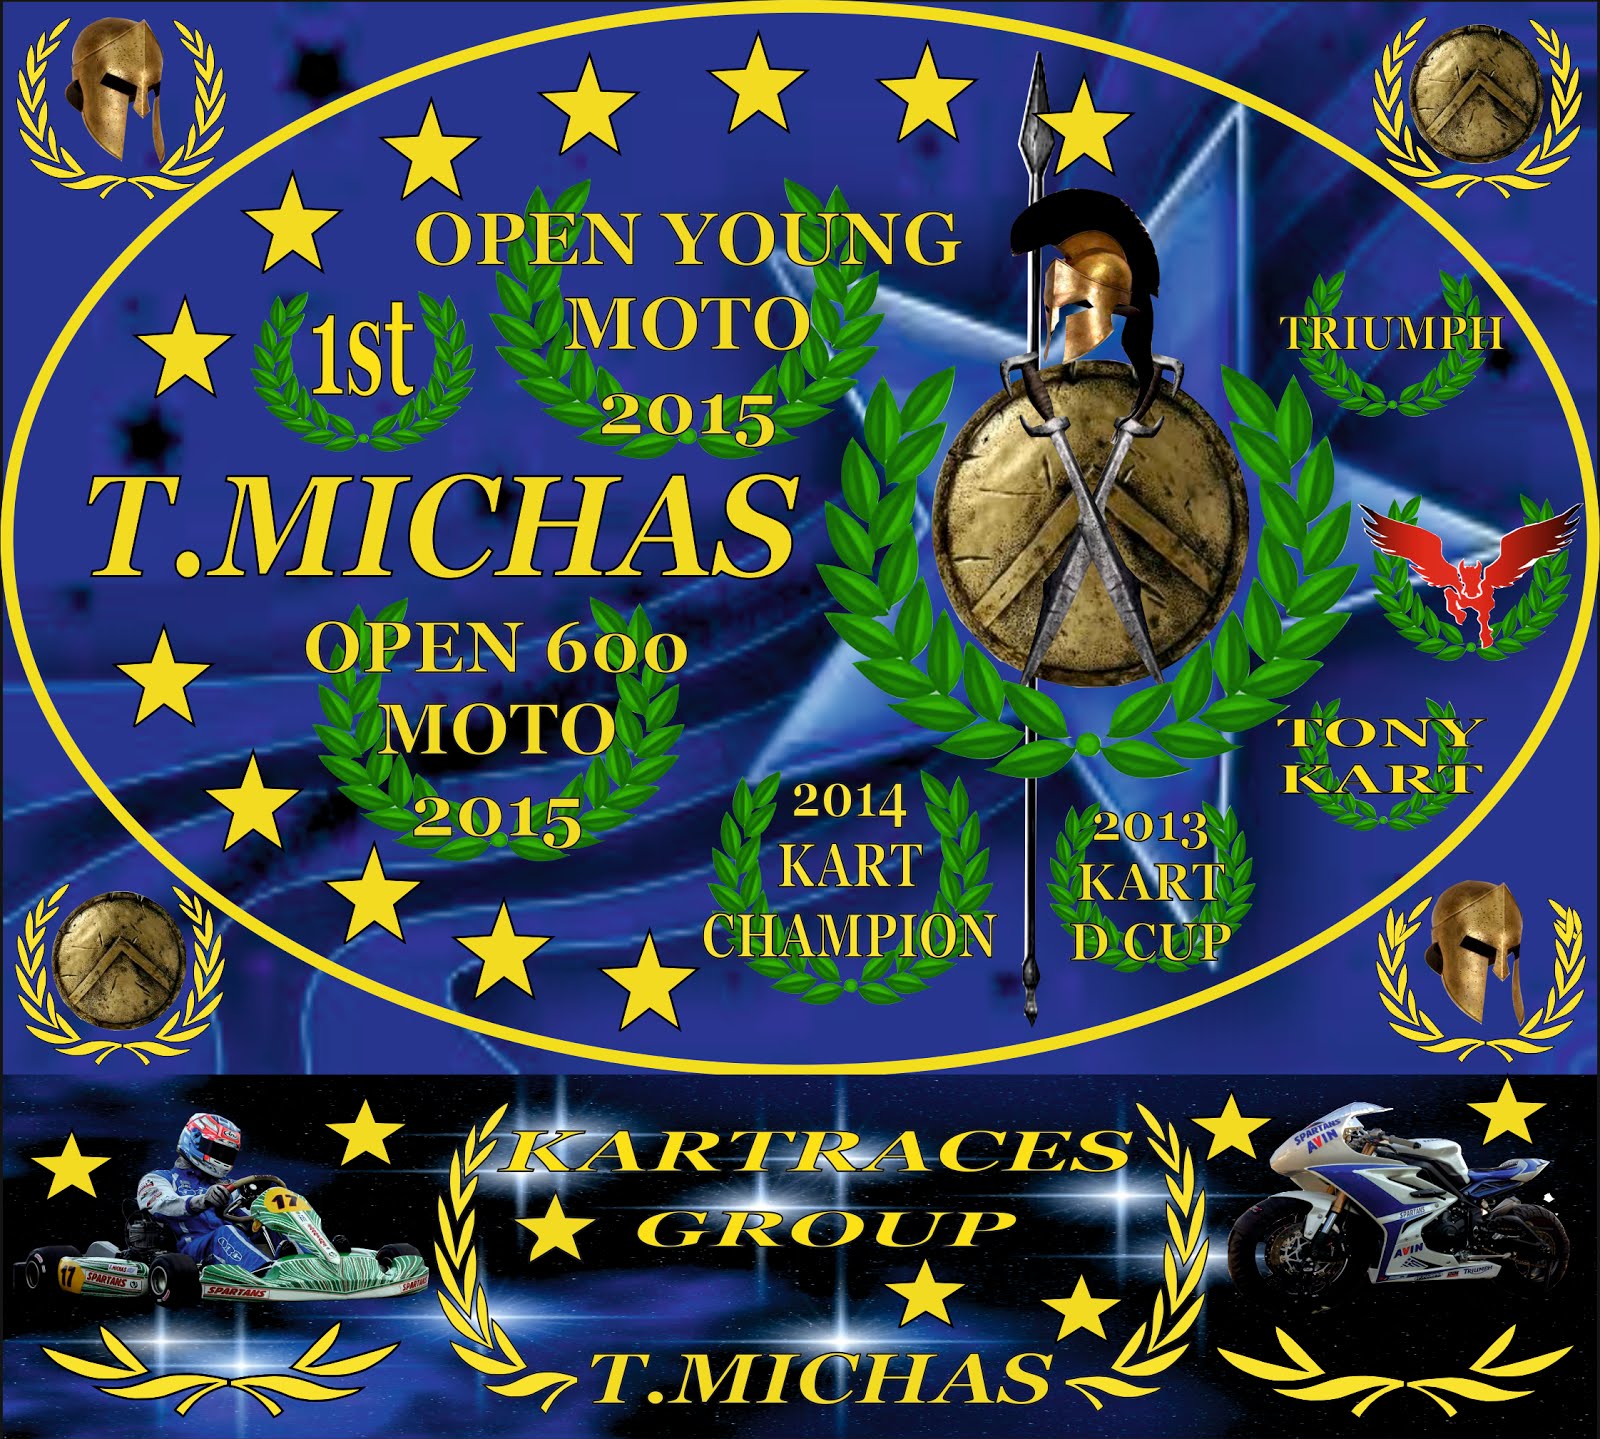 THEOFANIS MICHAS HISTORY